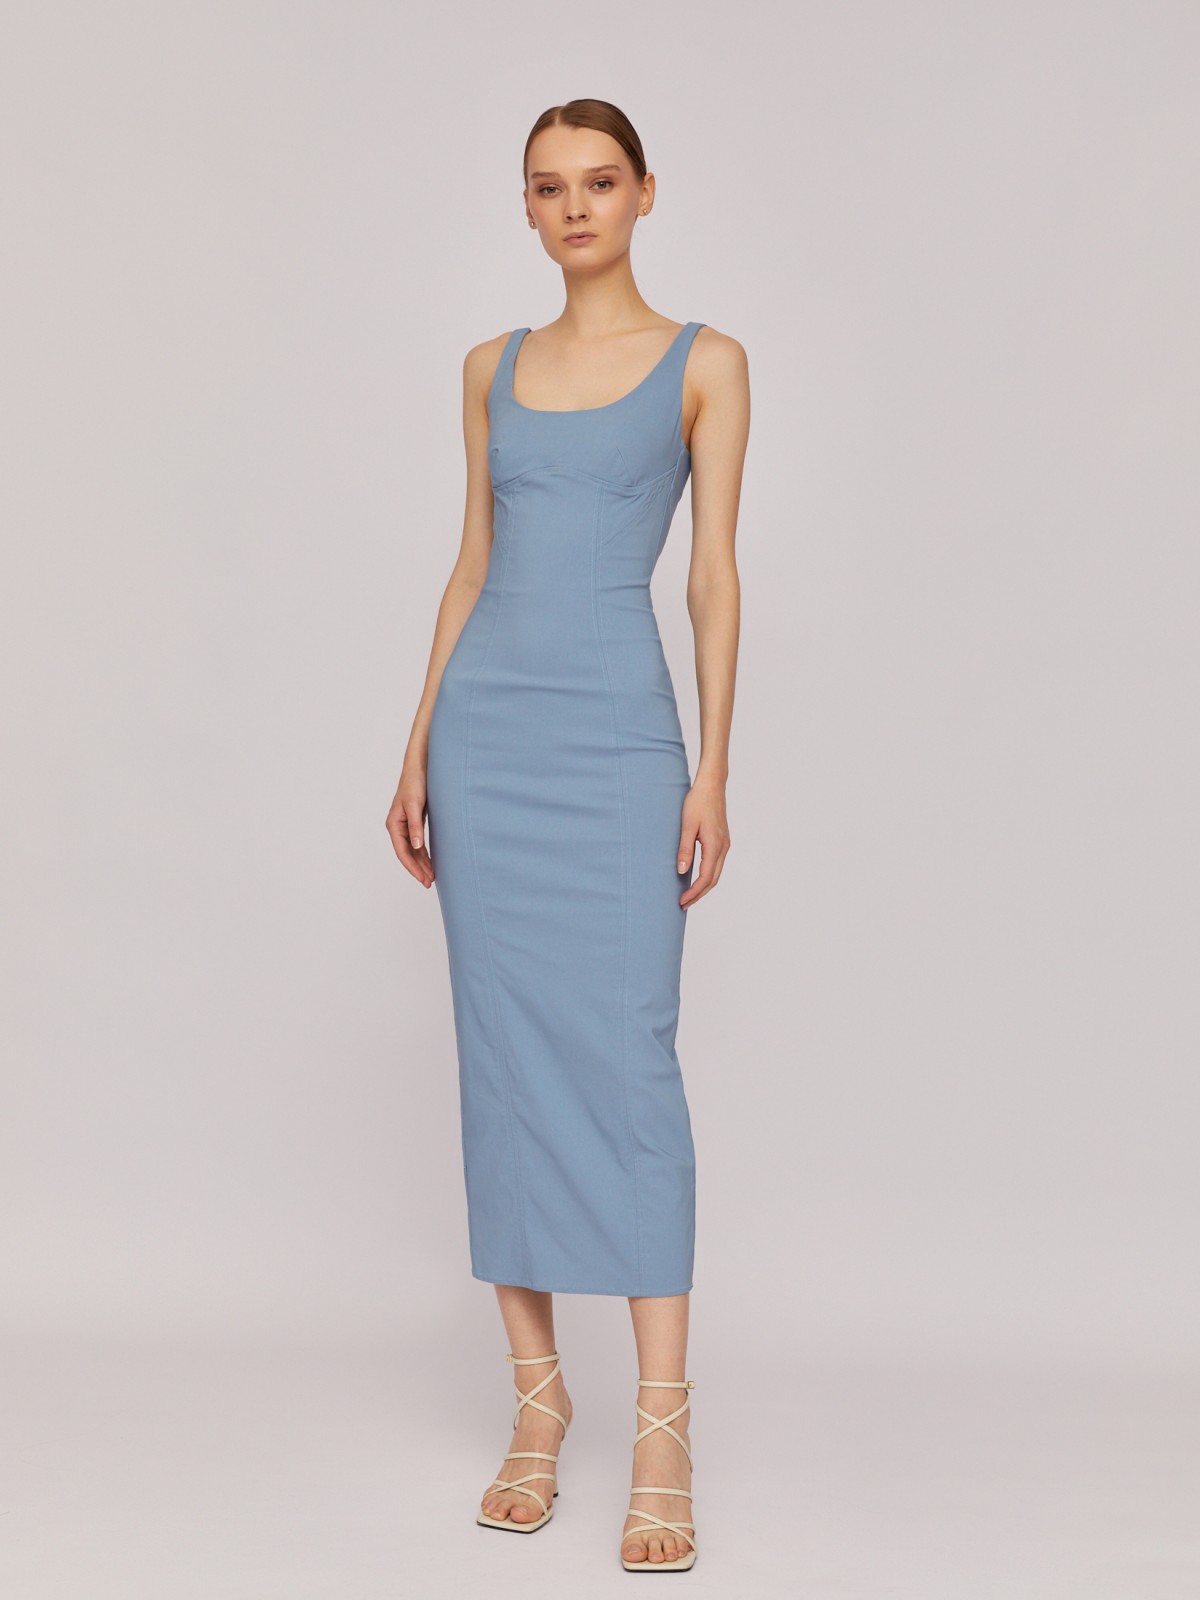 Платье-футляр без рукавов с имитацией корсета zolla 02425824Y091, цвет голубой, размер XS - фото 1